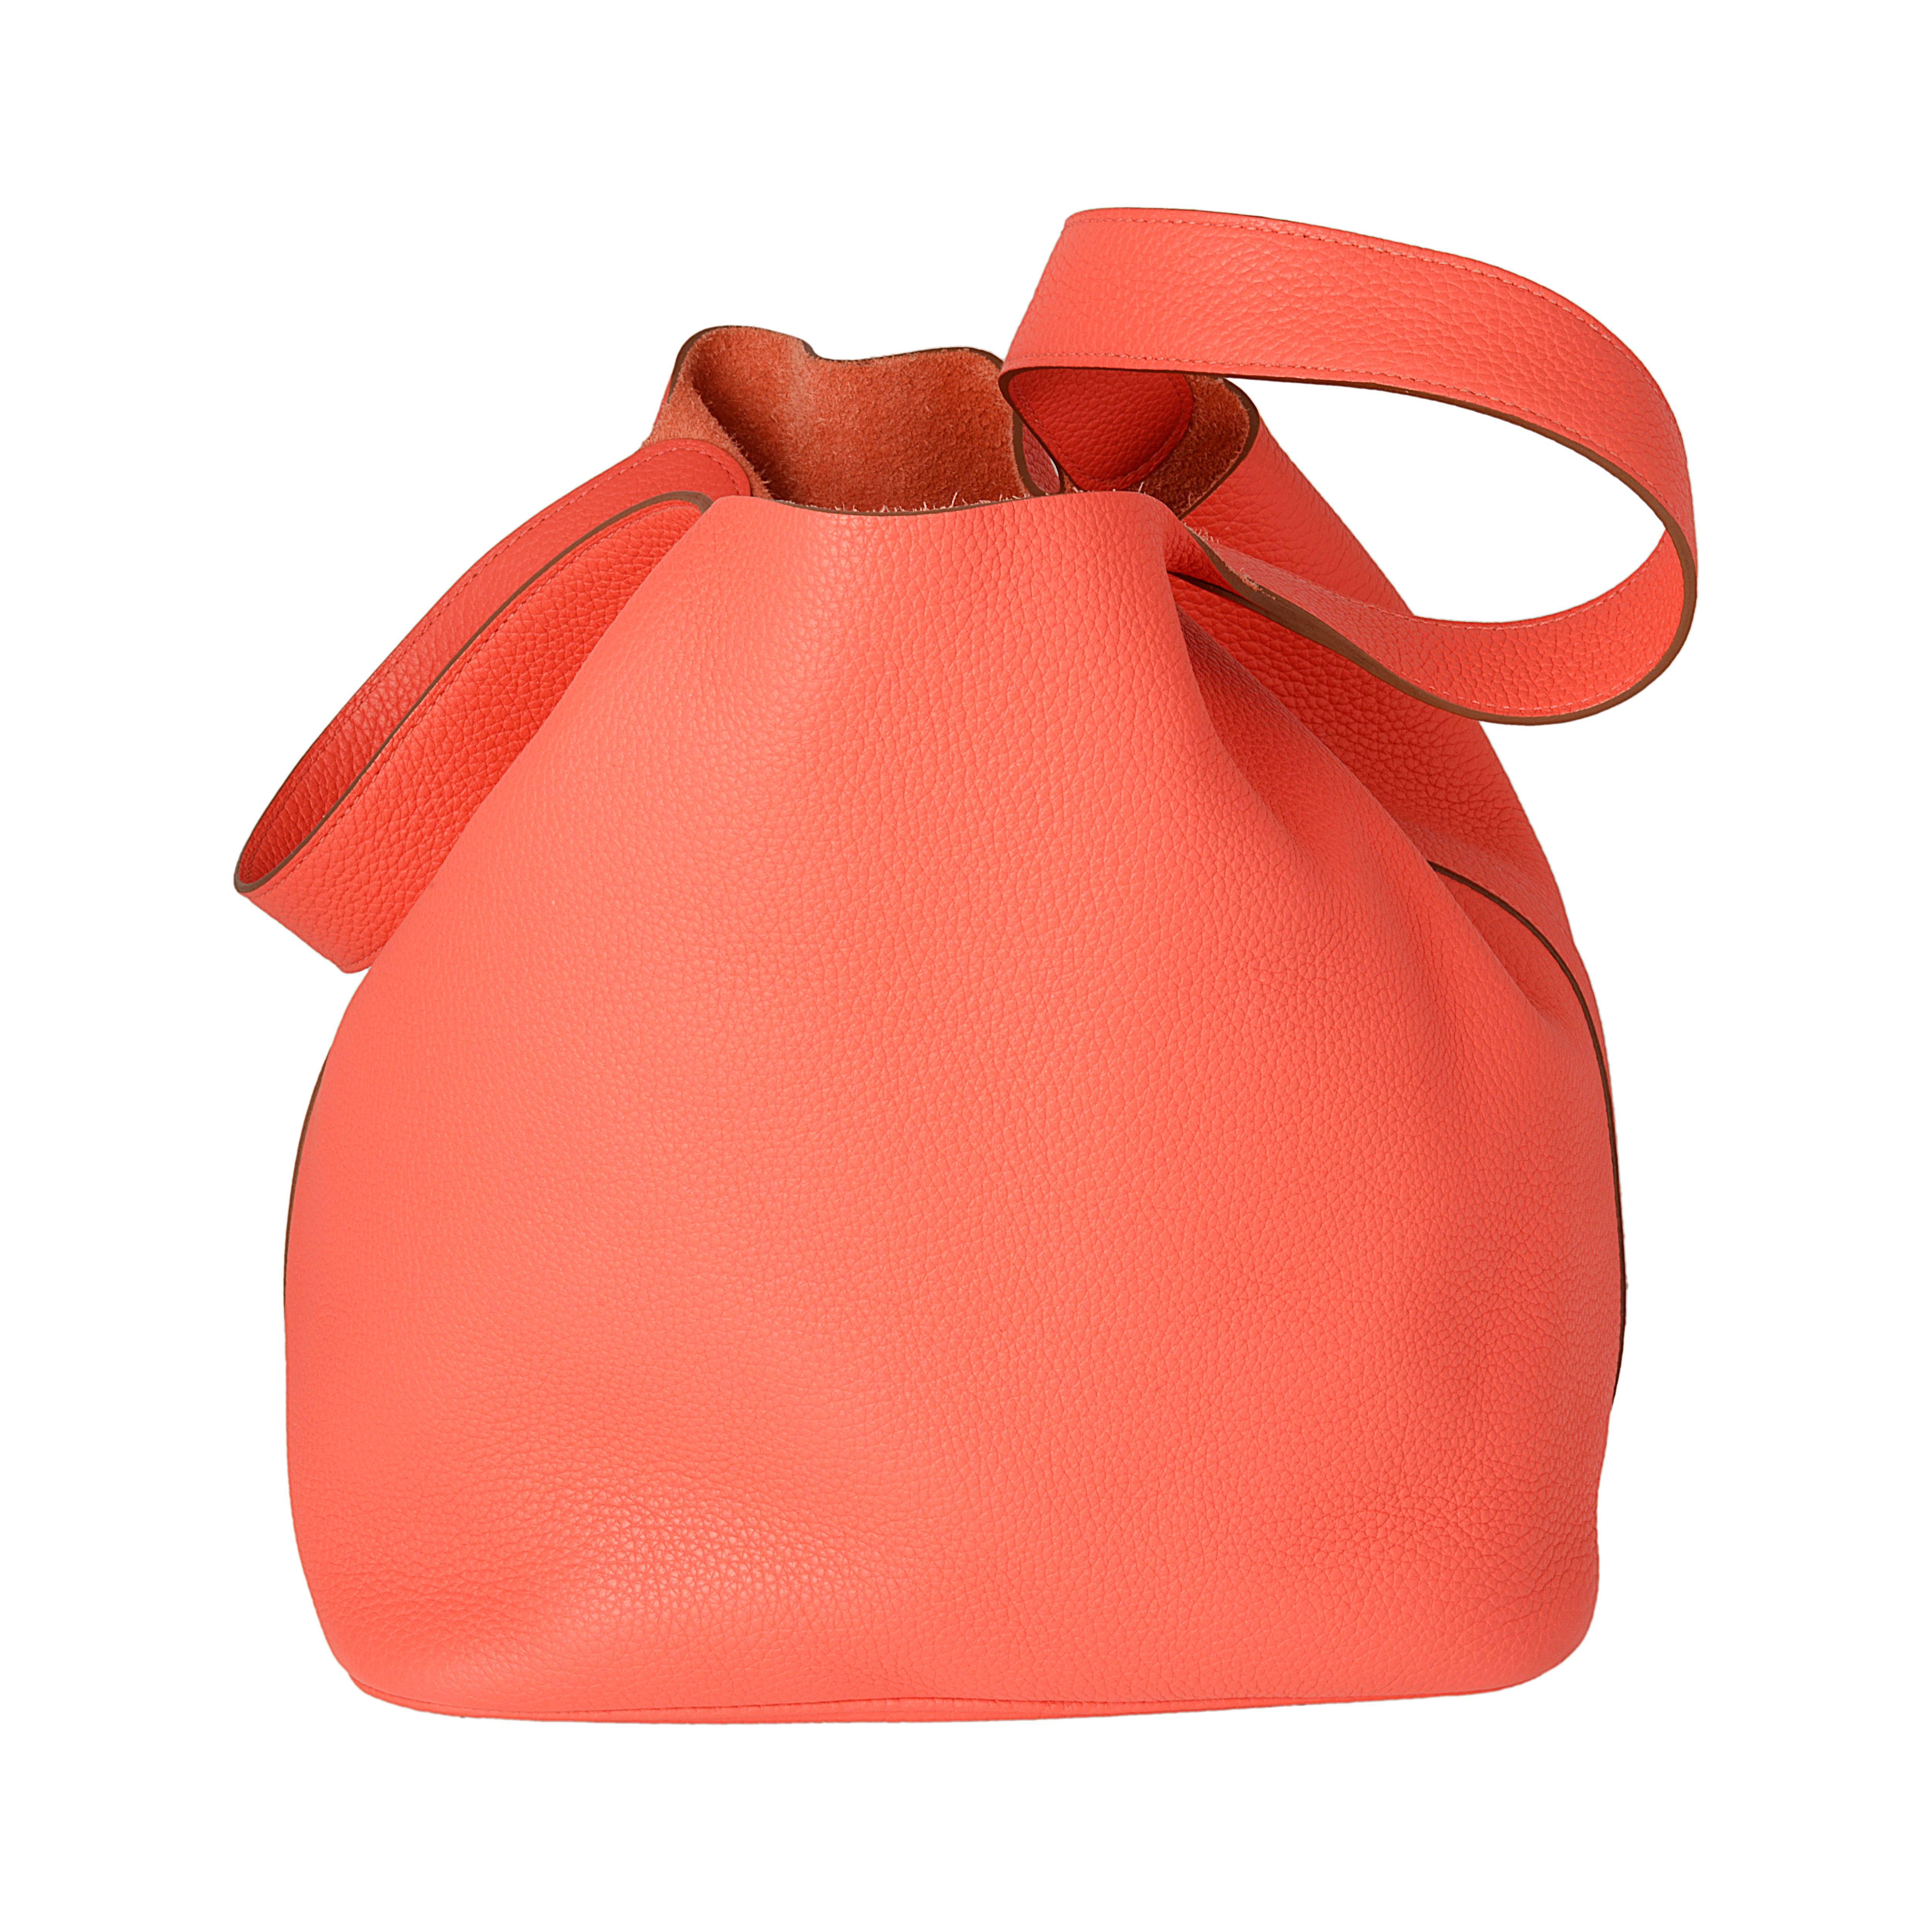 Hermes Rose Jaipur Clemence Leather 28cm Picotin Bag